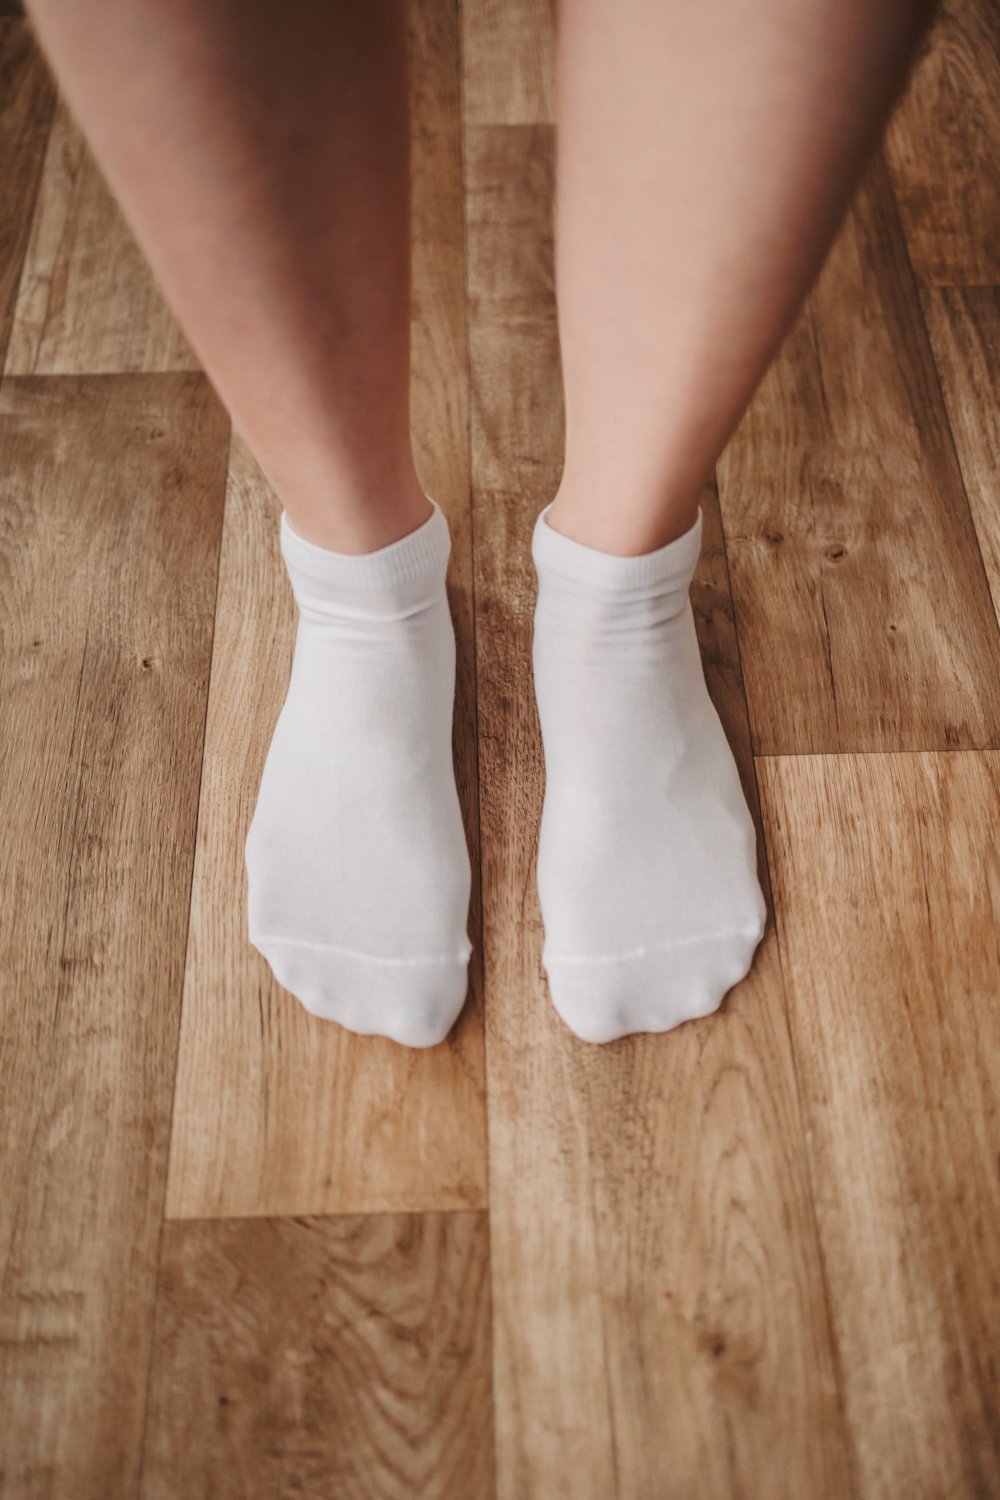 Calcetines Barefoot - cortos - blancos